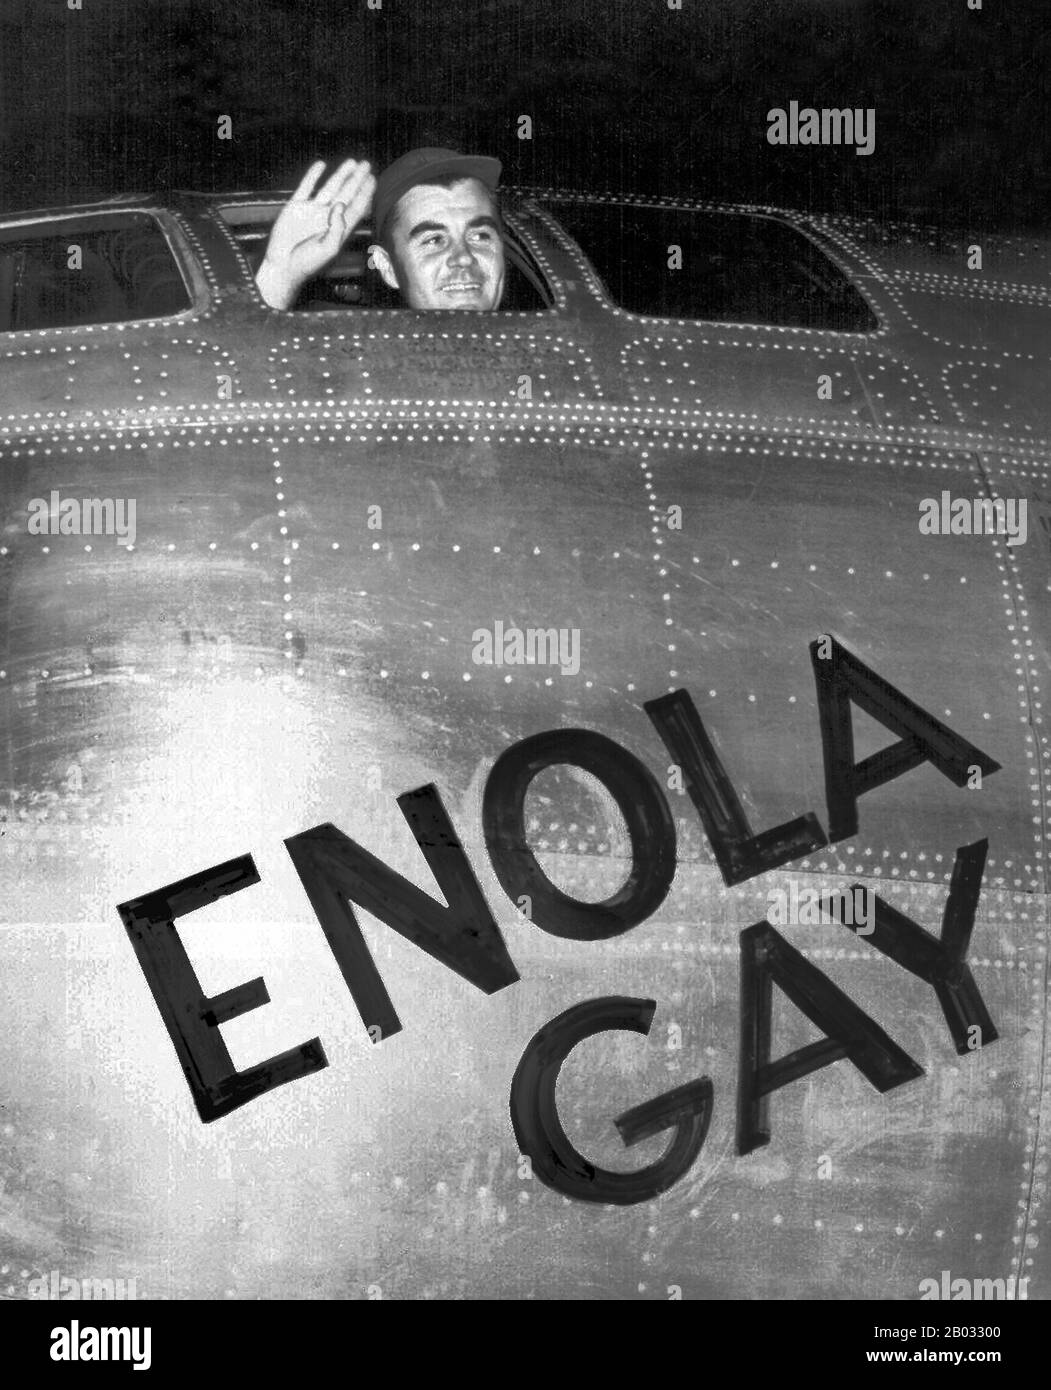 enola gay large smoke grenade